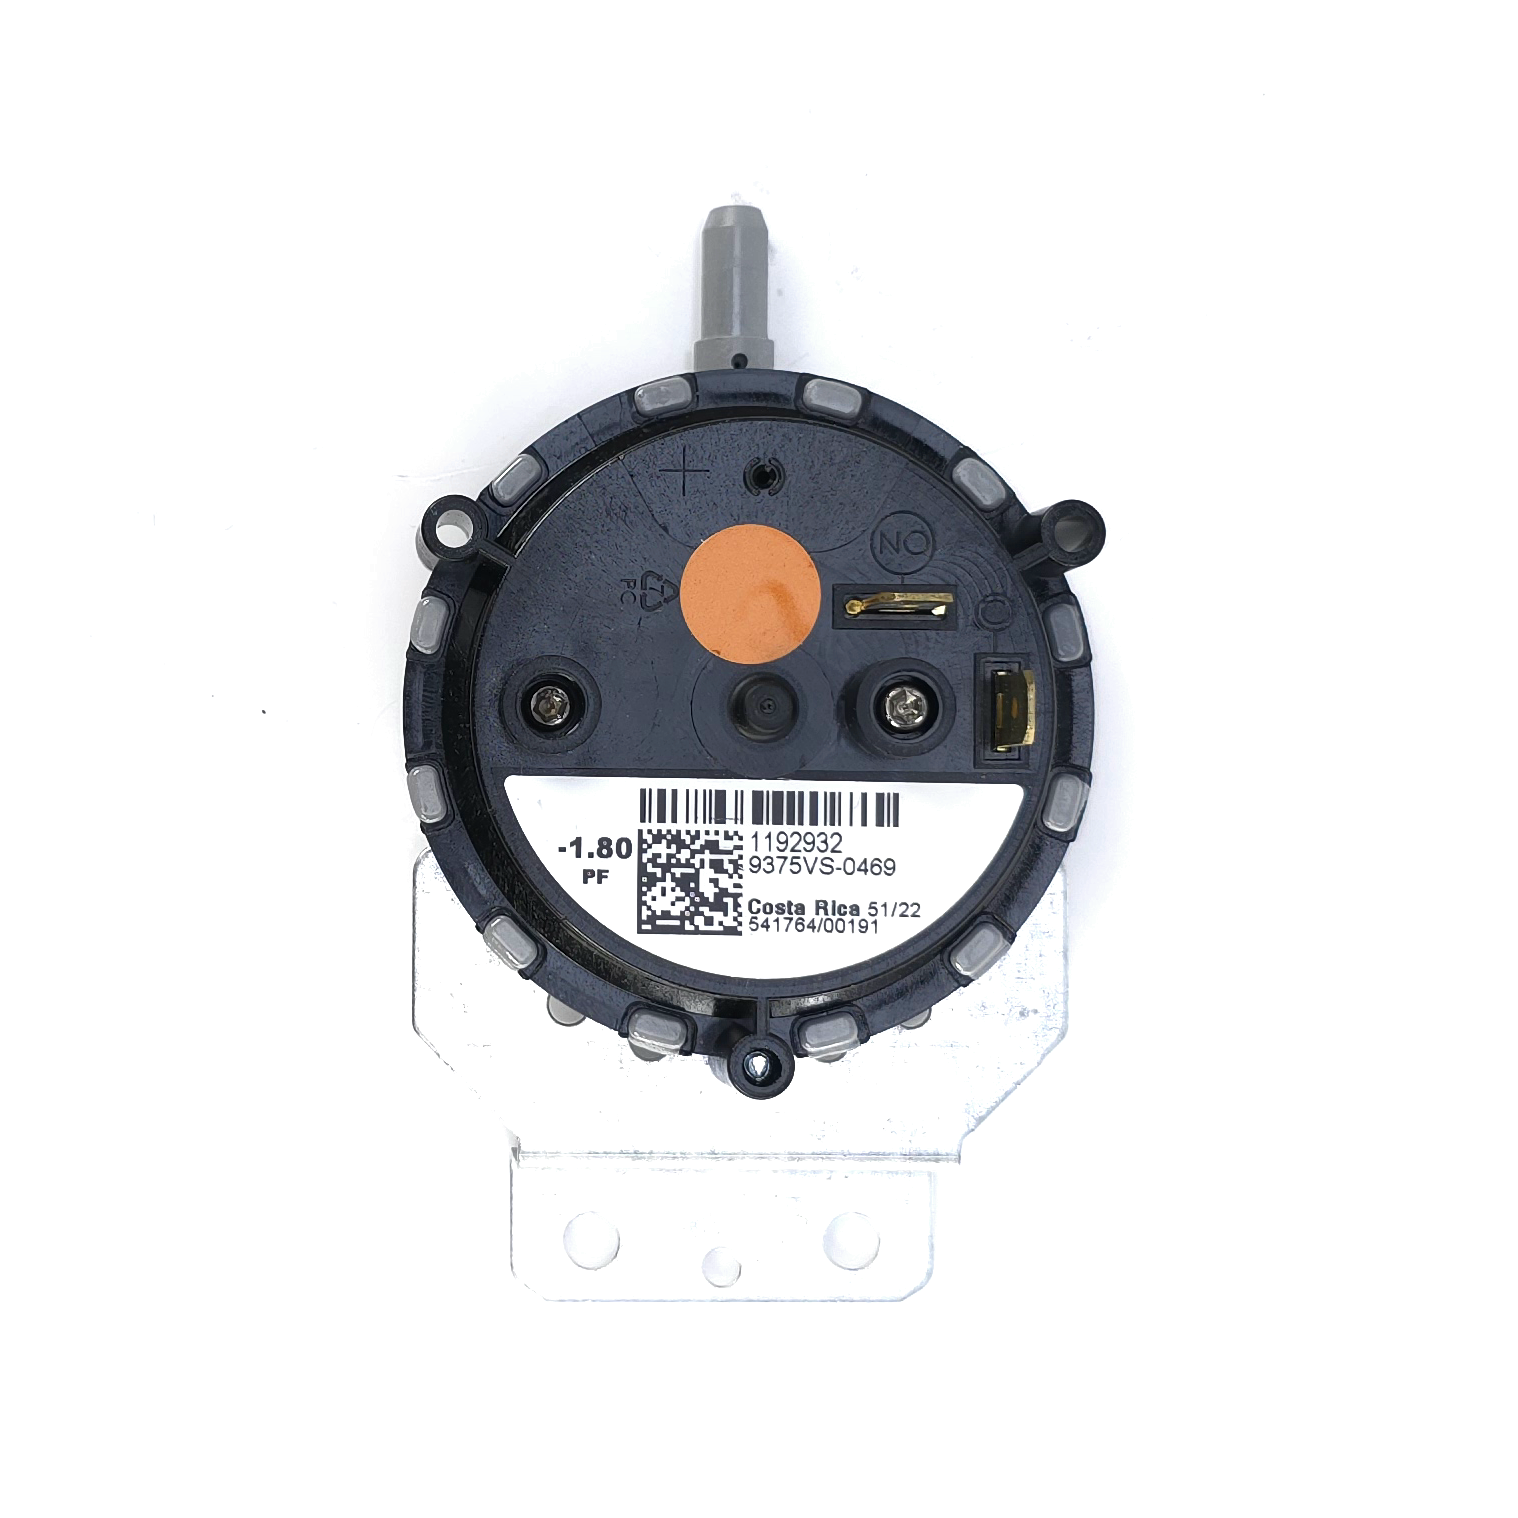 Tempstar 1192932 Furnace Pressure Switch 1.80 WC